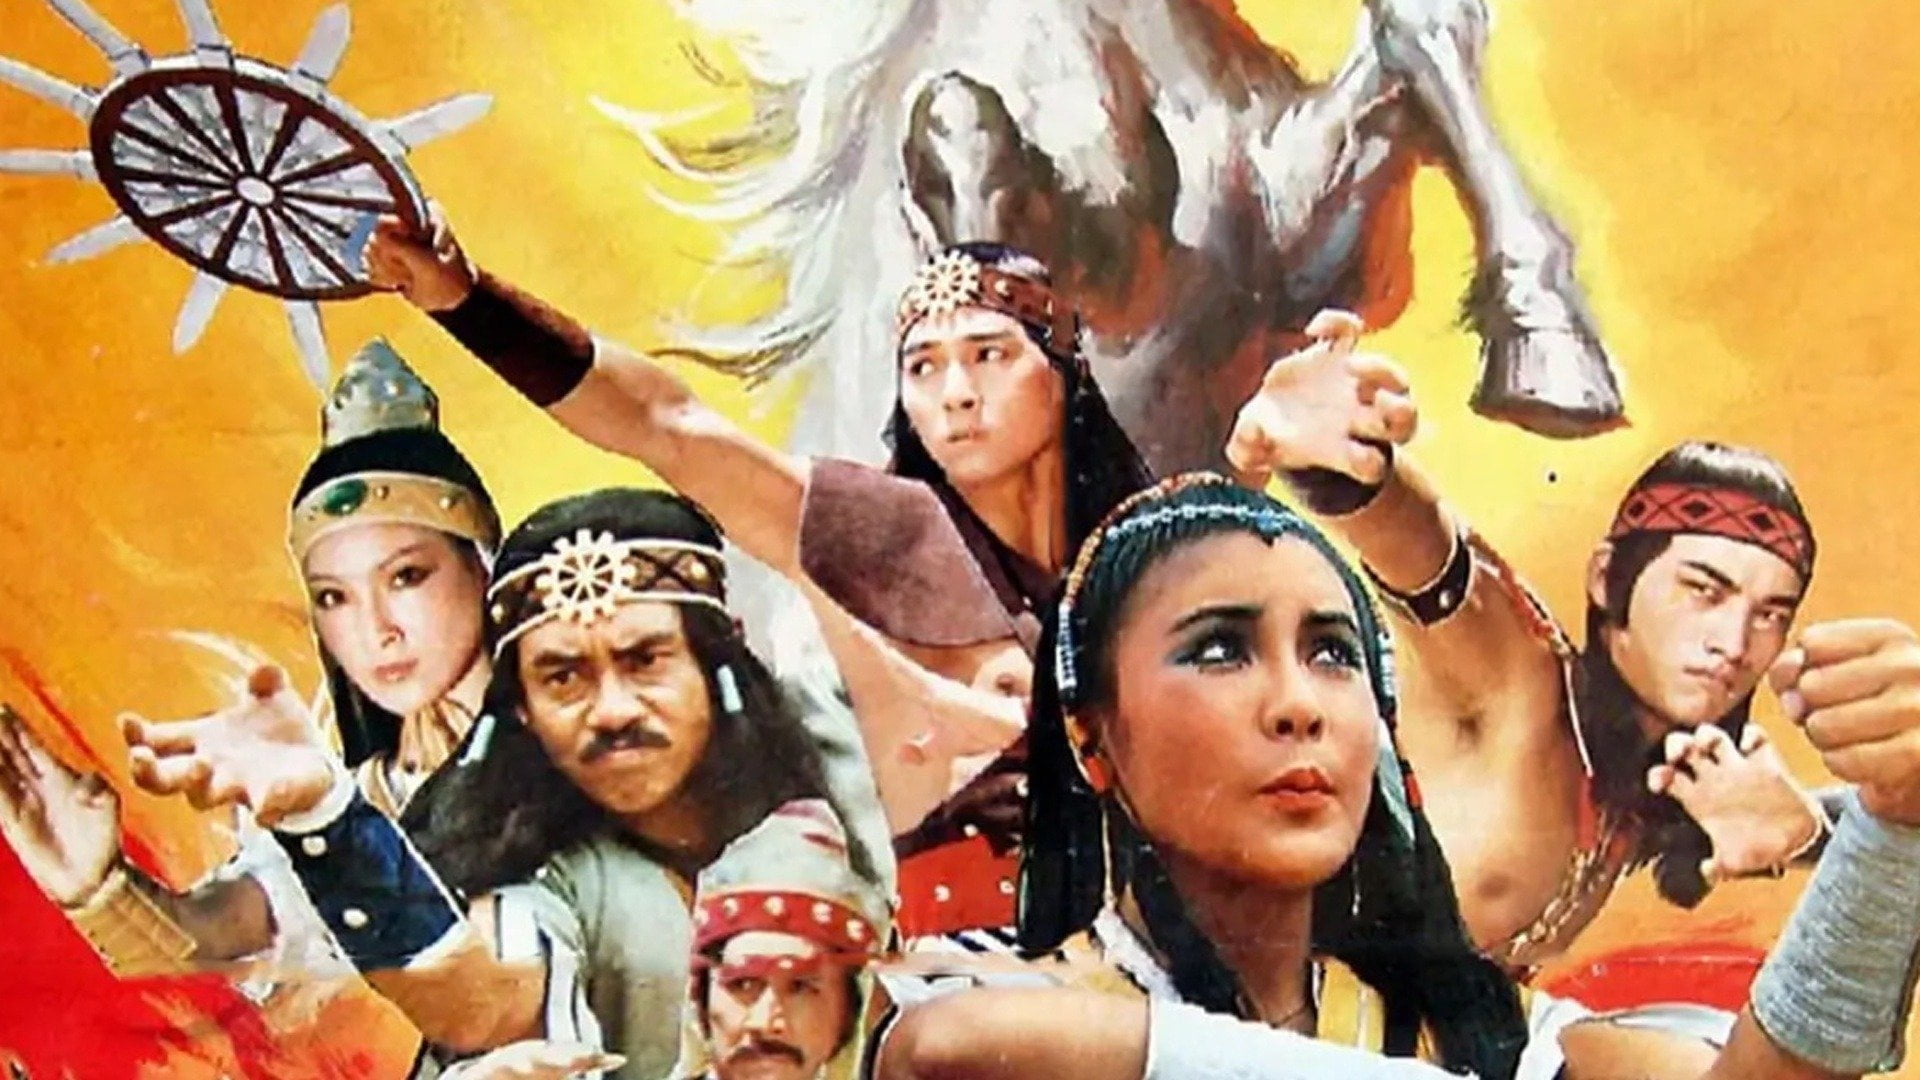 Return of the Kung Fu Dragon (1976)